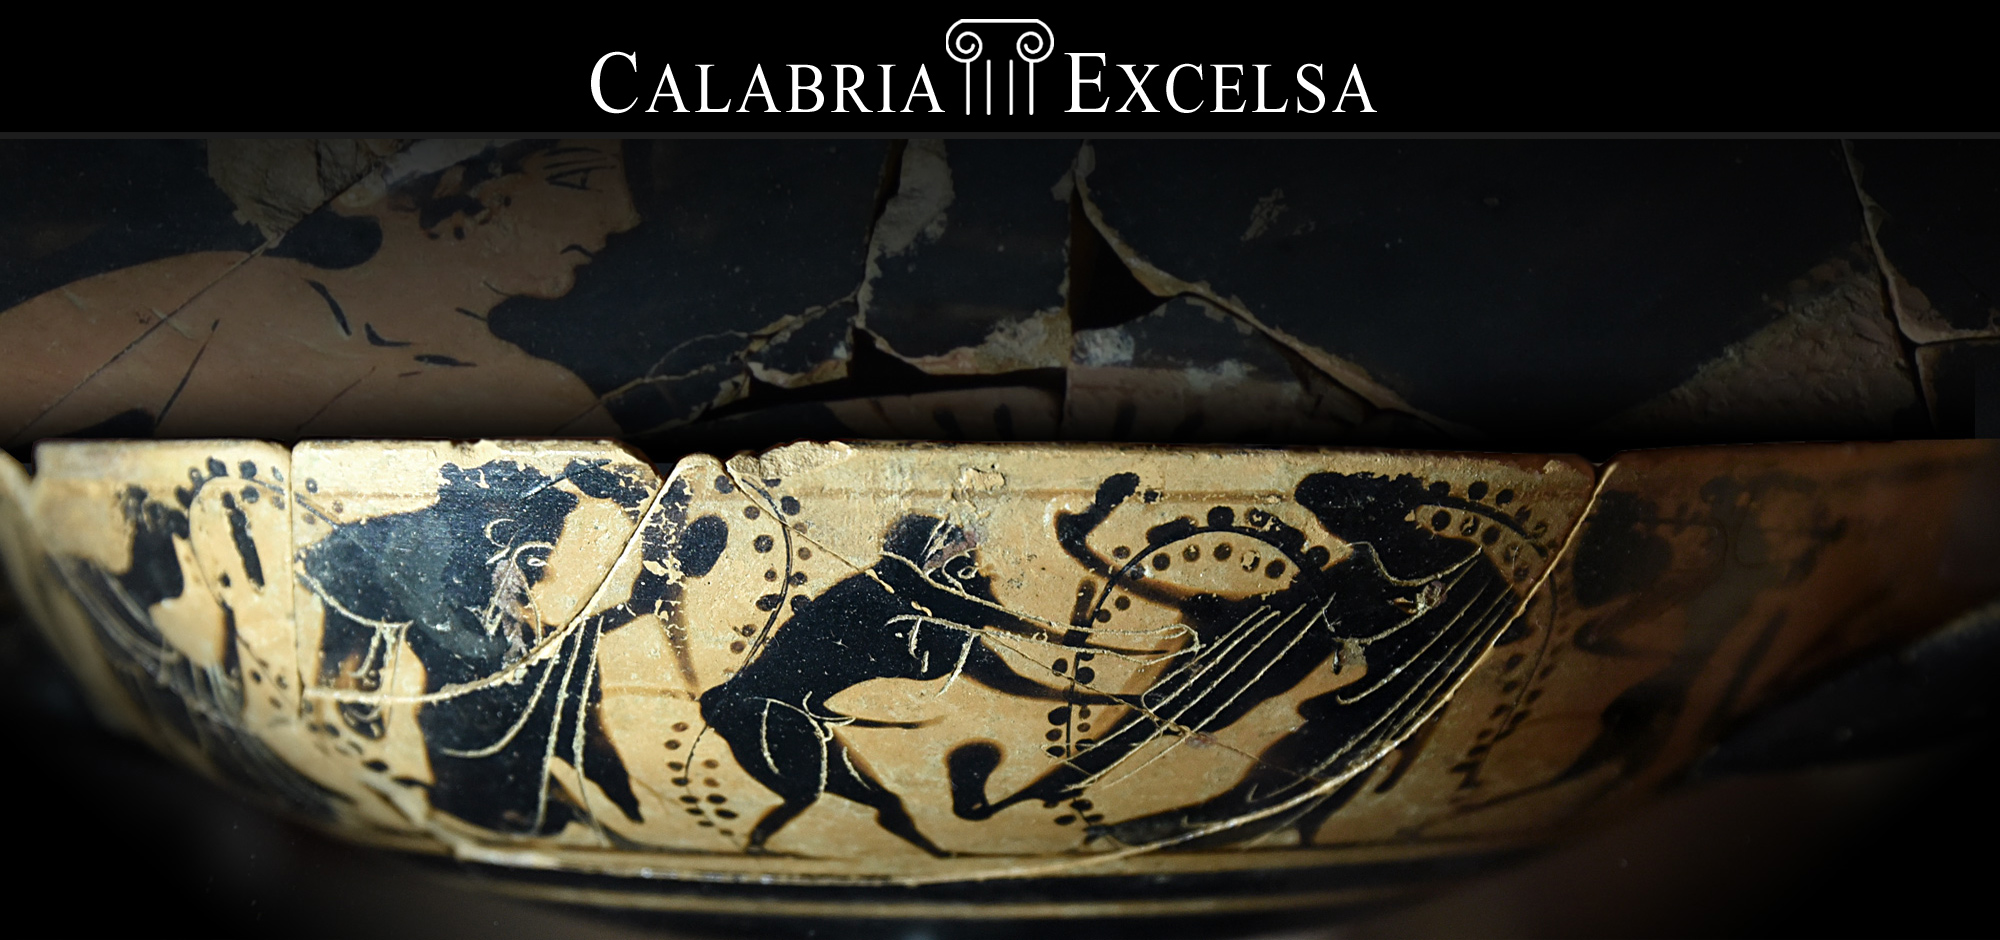 Calabria Excelsa - Museo Archeologico di Blanda